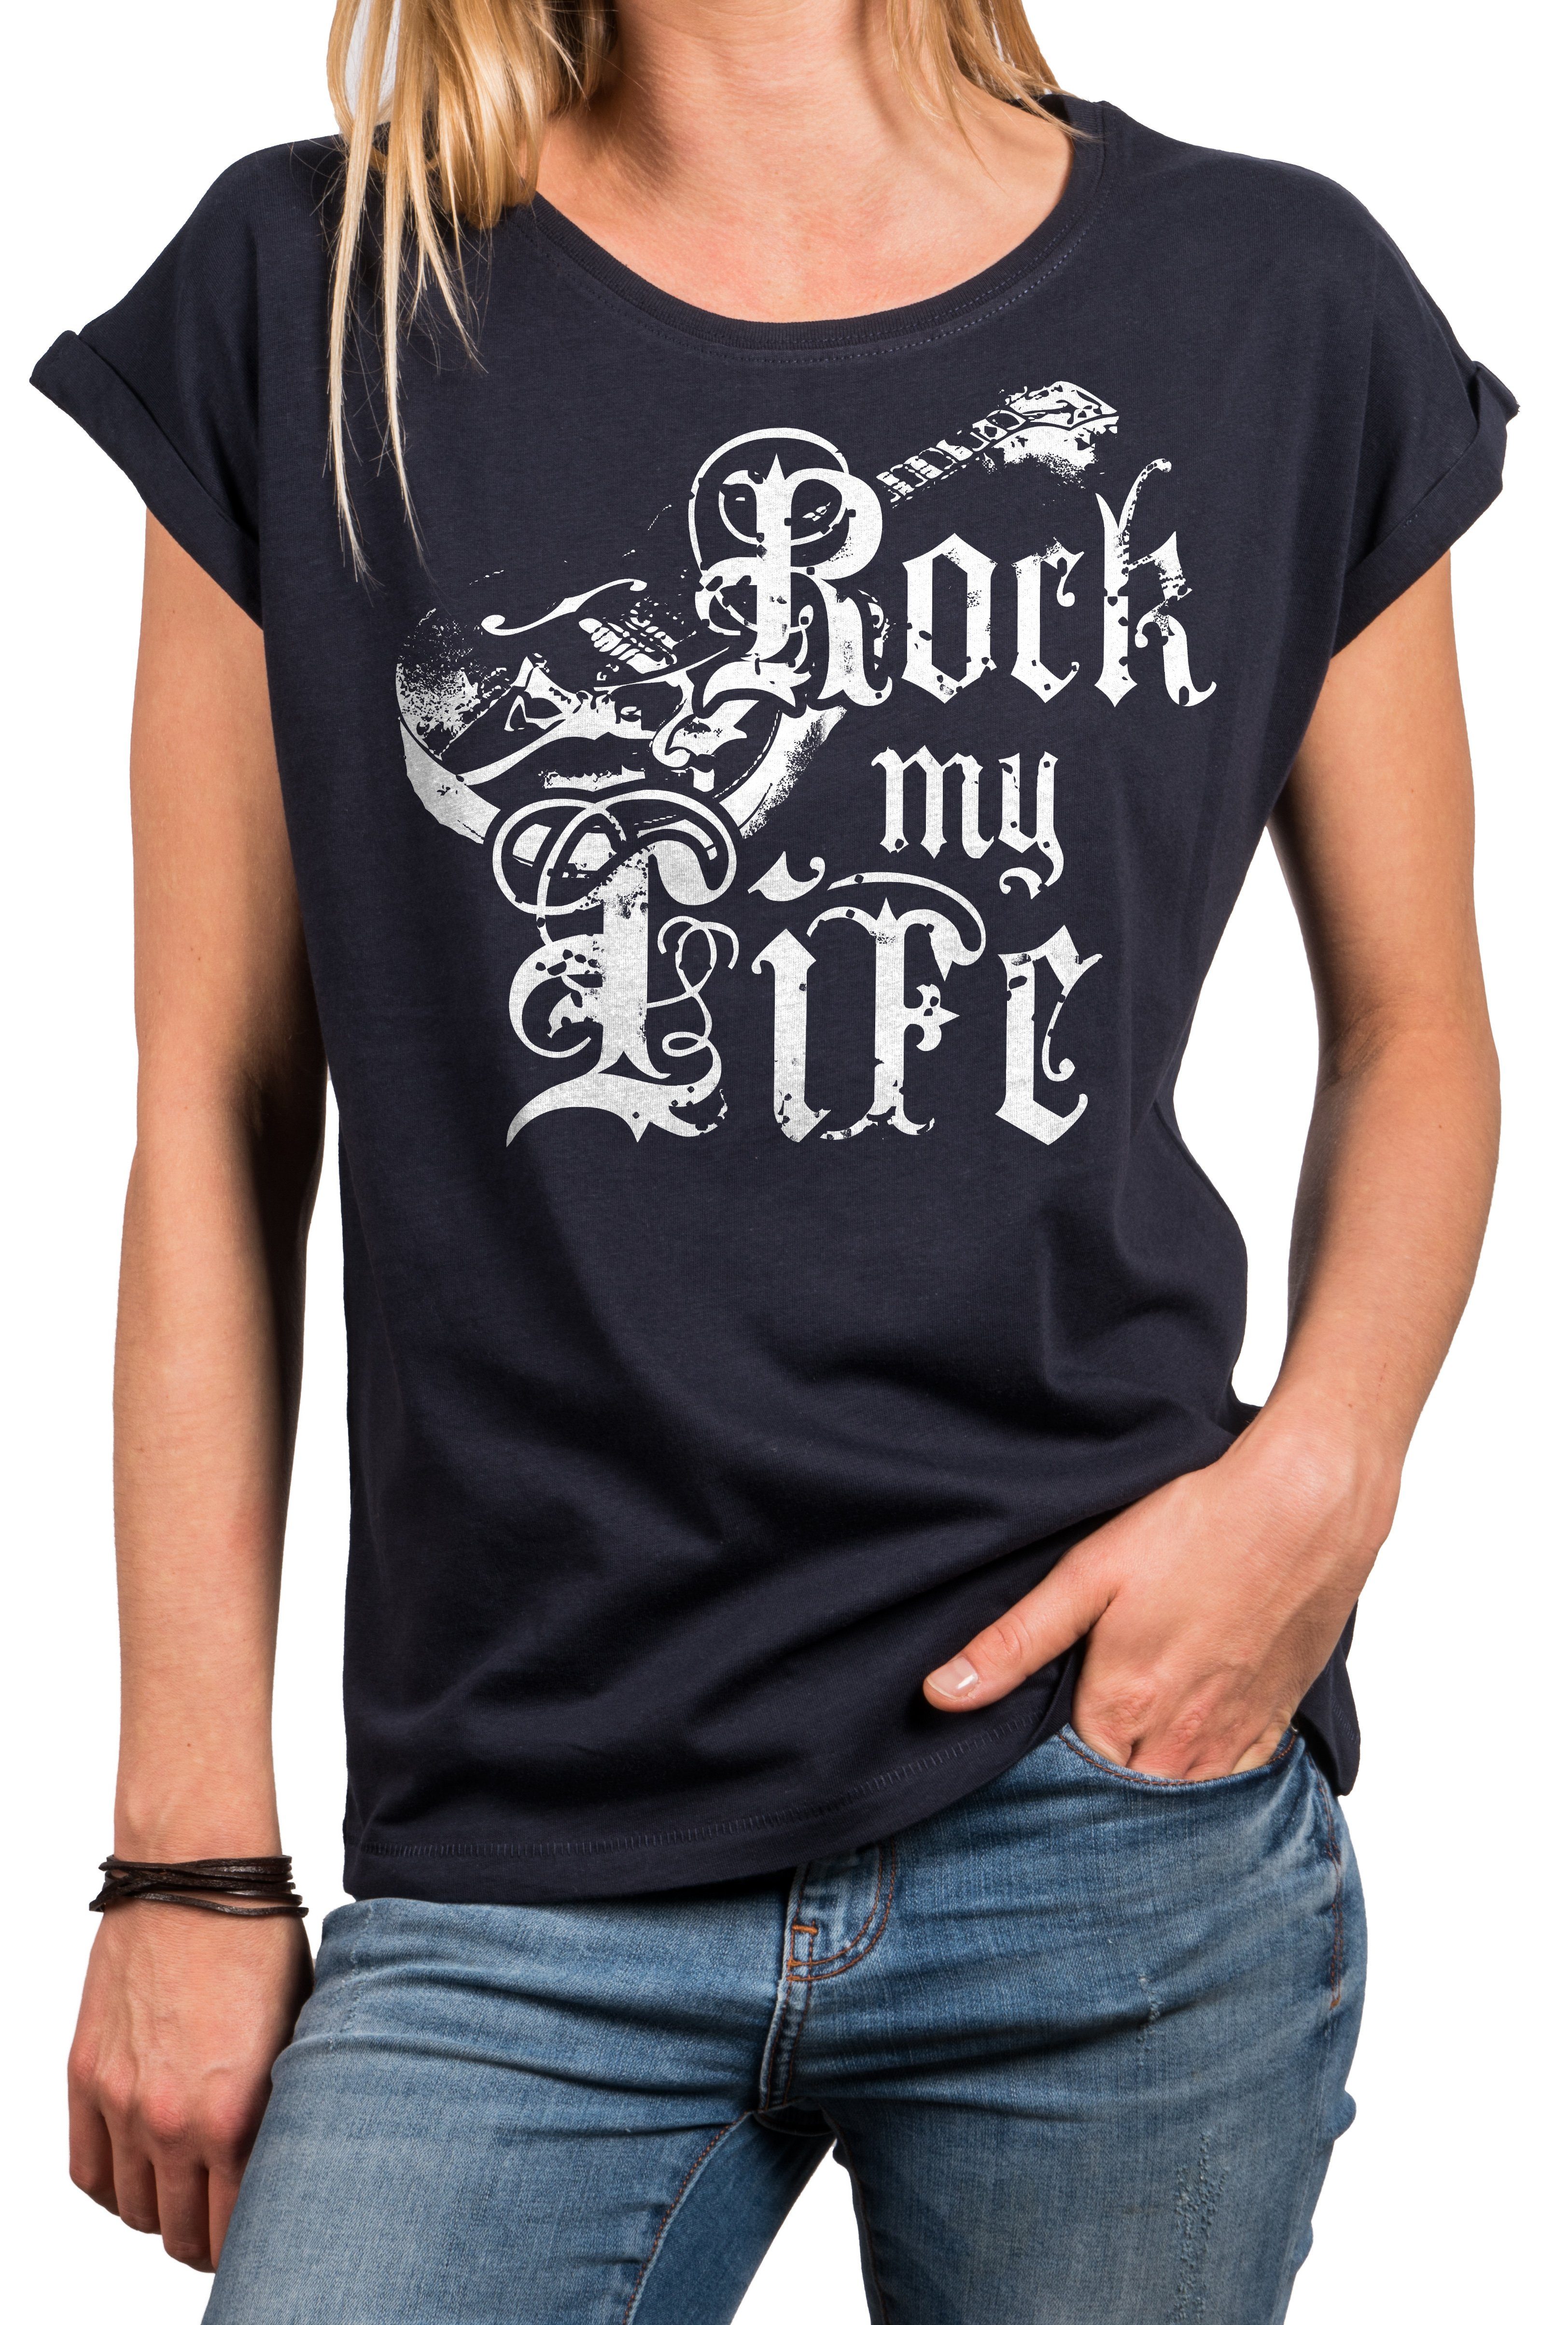 Baumwolle, schwarz, Gitarrenmotiv rosa, Top Print-Shirt MAKAYA Damen Band (Rock lässige Ausgefallene Oberteile Größen T-Shirts große Motiv, blau) grau, Tunika